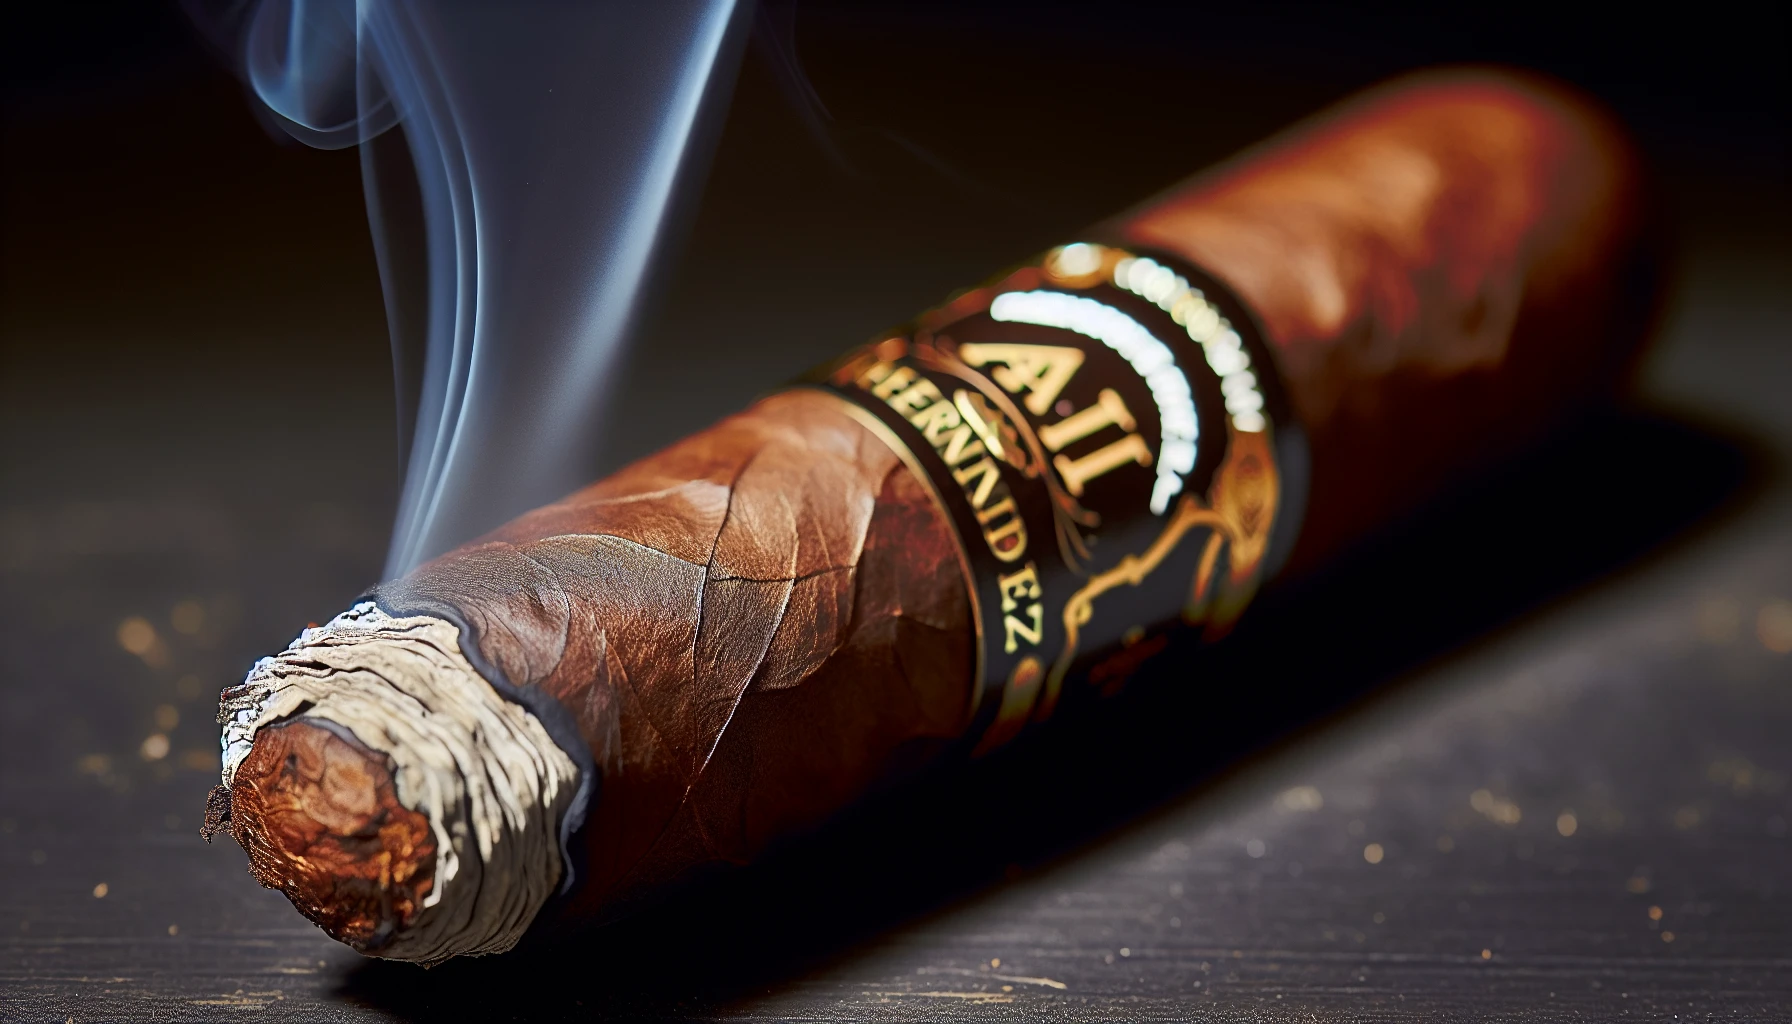 A close-up of an AJ Fernandez Días de Gloria Robusto cigar with a perfect burn line